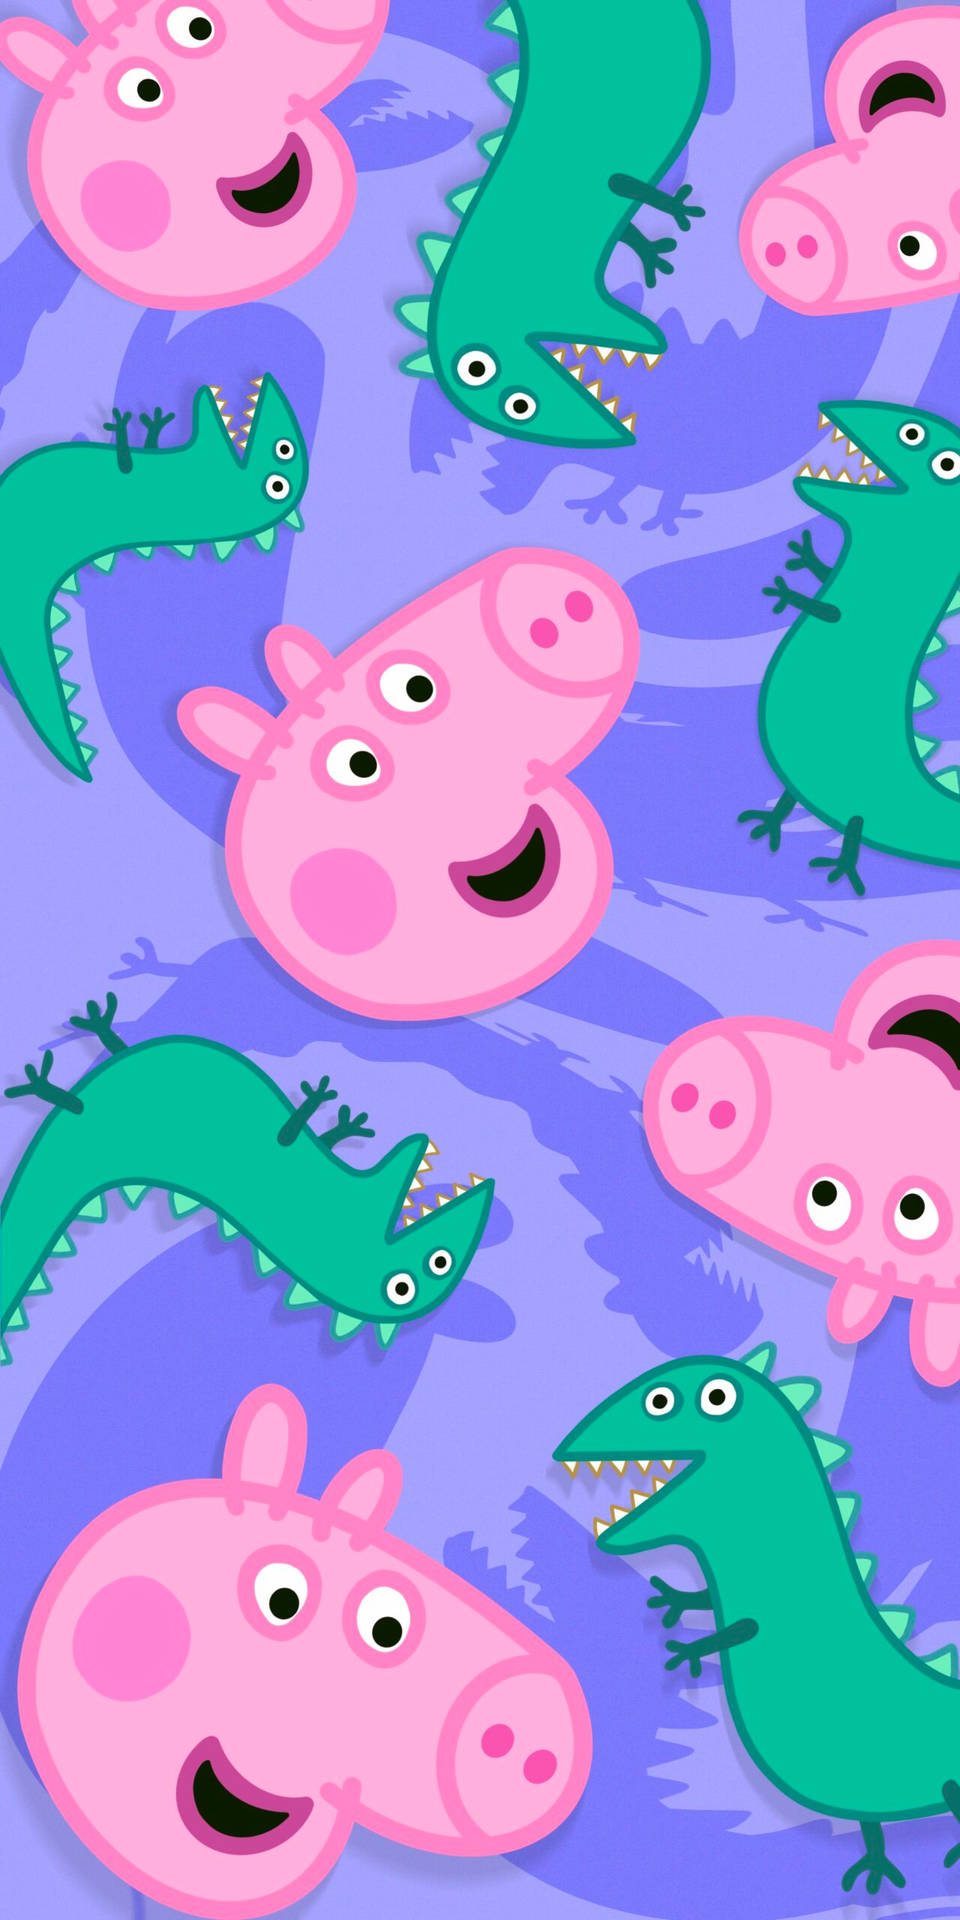 Big Lizard And Peppa Pig iPhone Wallpaper